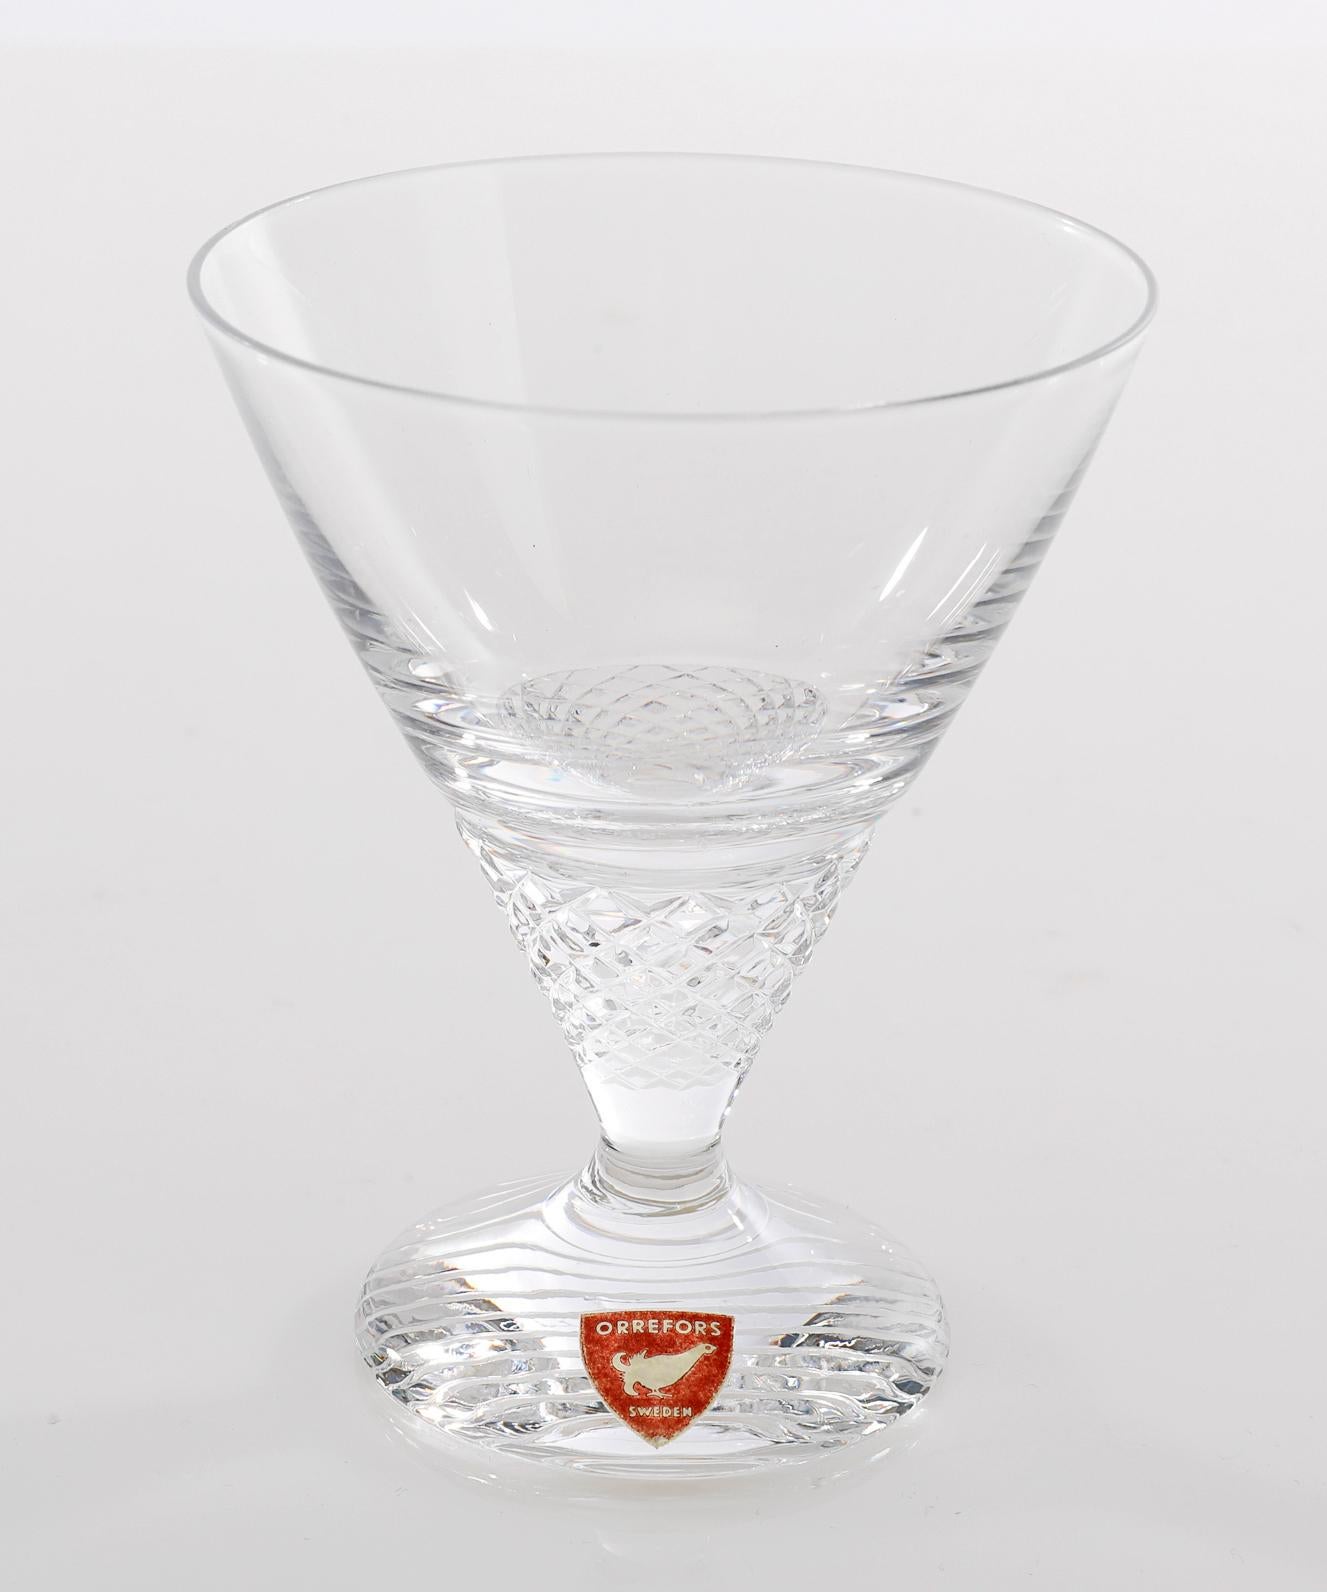 Hand-Crafted Scandinavian Modern Crystal Glass Designed by Ingeborg Lundin for Orrefors, 1959